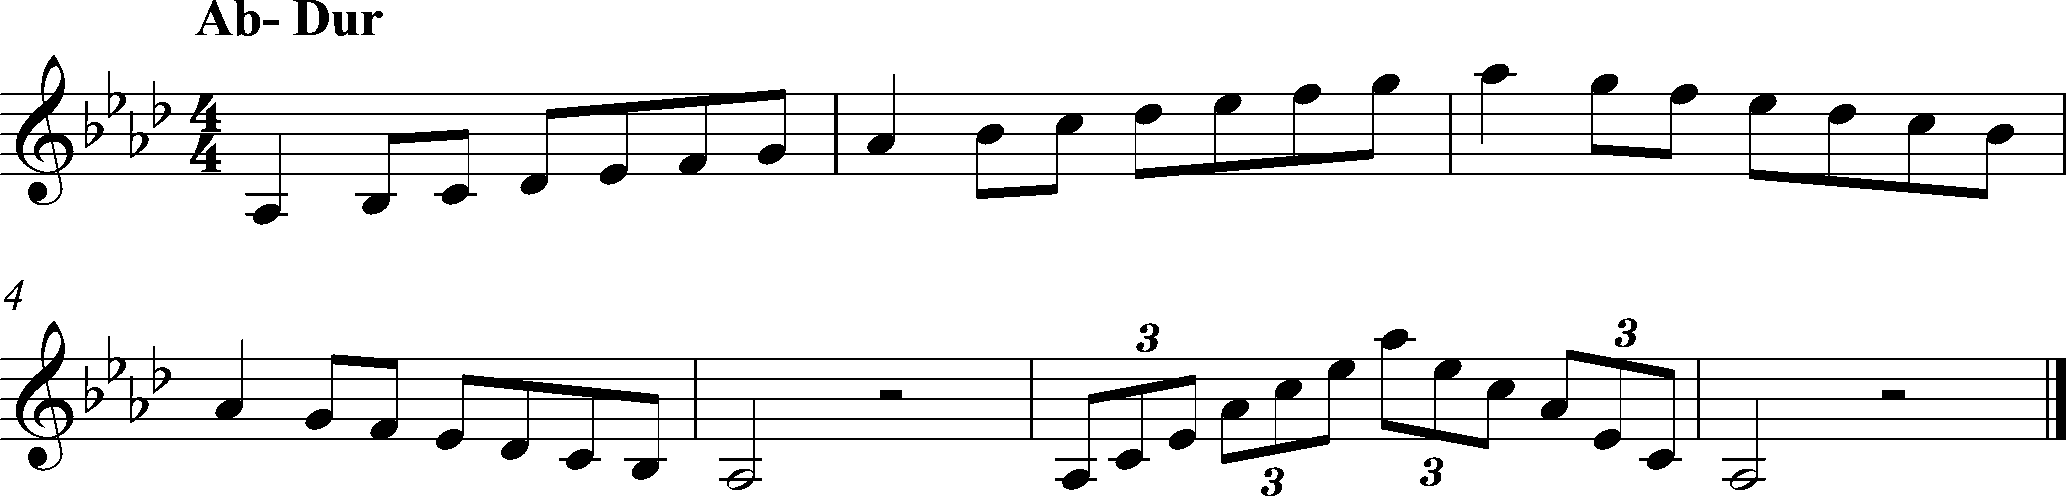 Ab-Dur, Tonleiter Klarinette